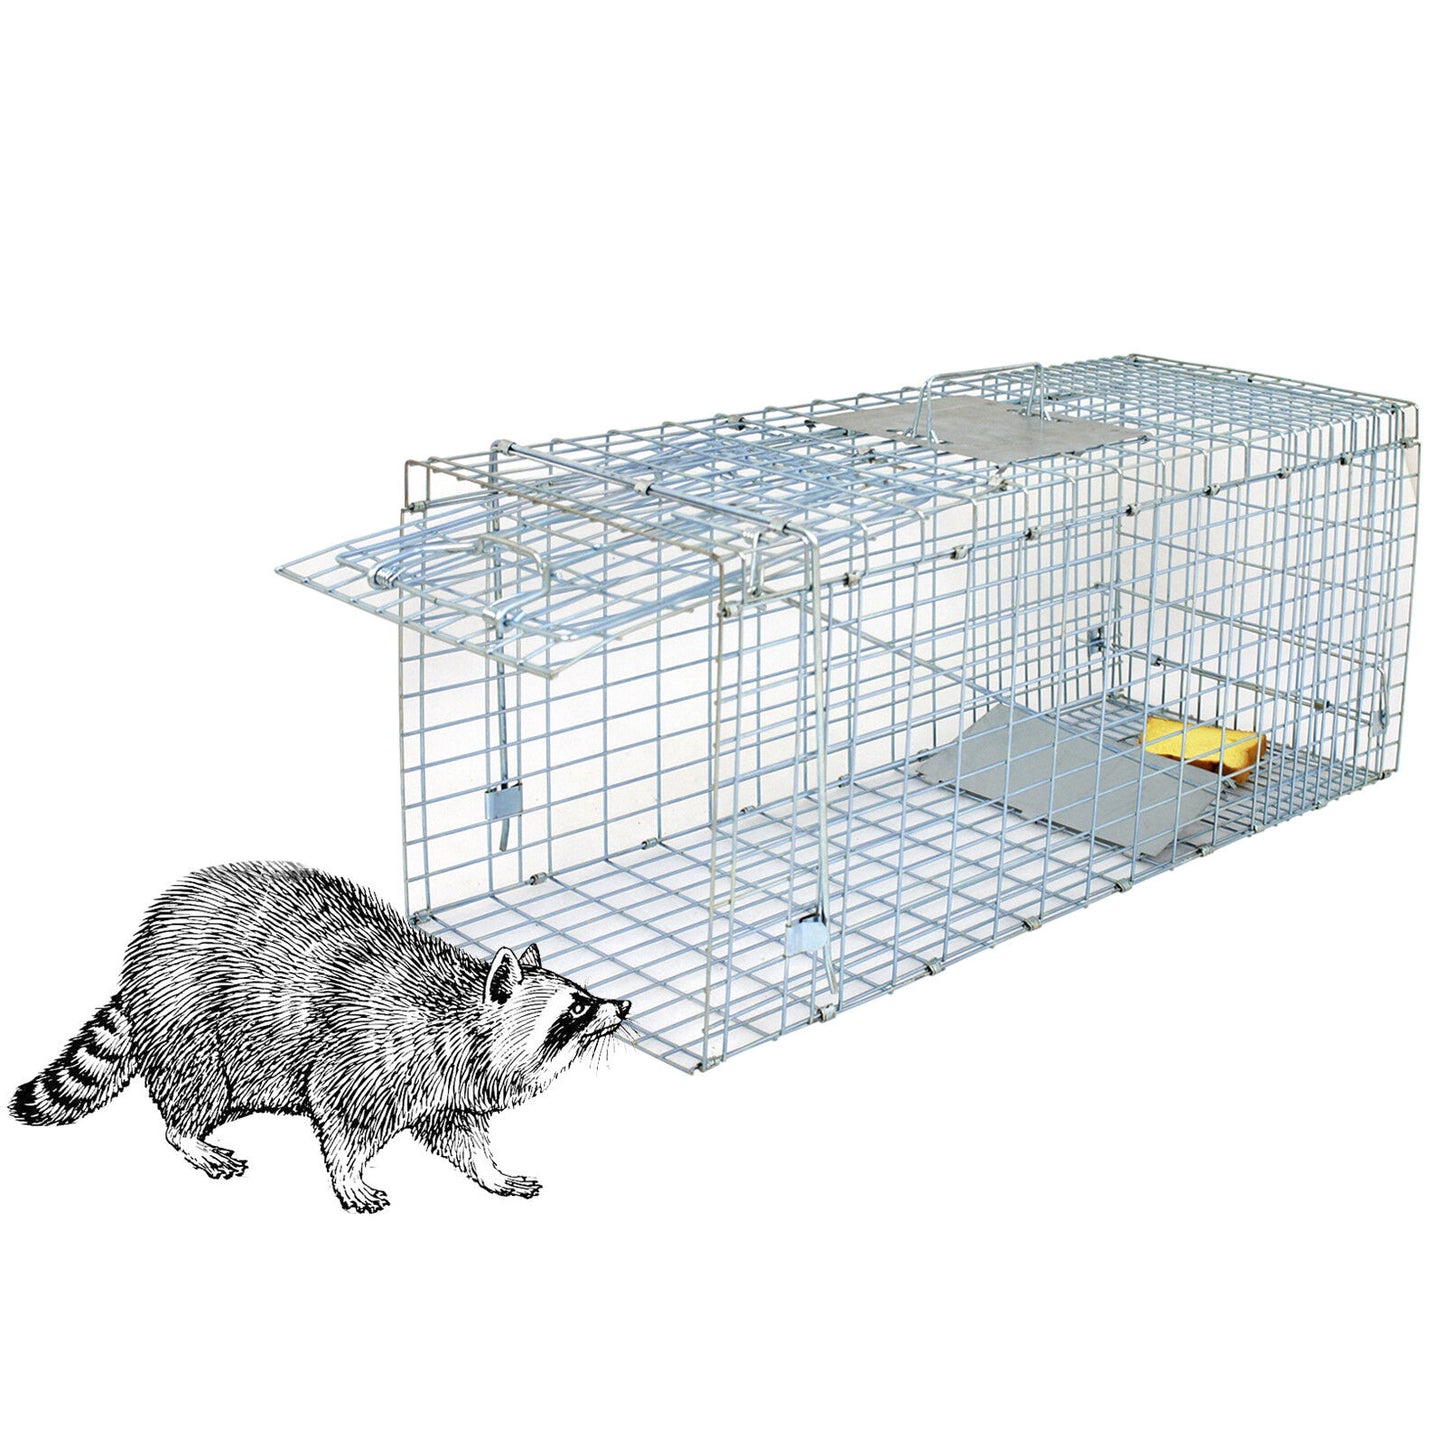 Humane Animal Trap 32x12x12 Steel Cage Live Rodent Control Skunk Rabbit Opossum